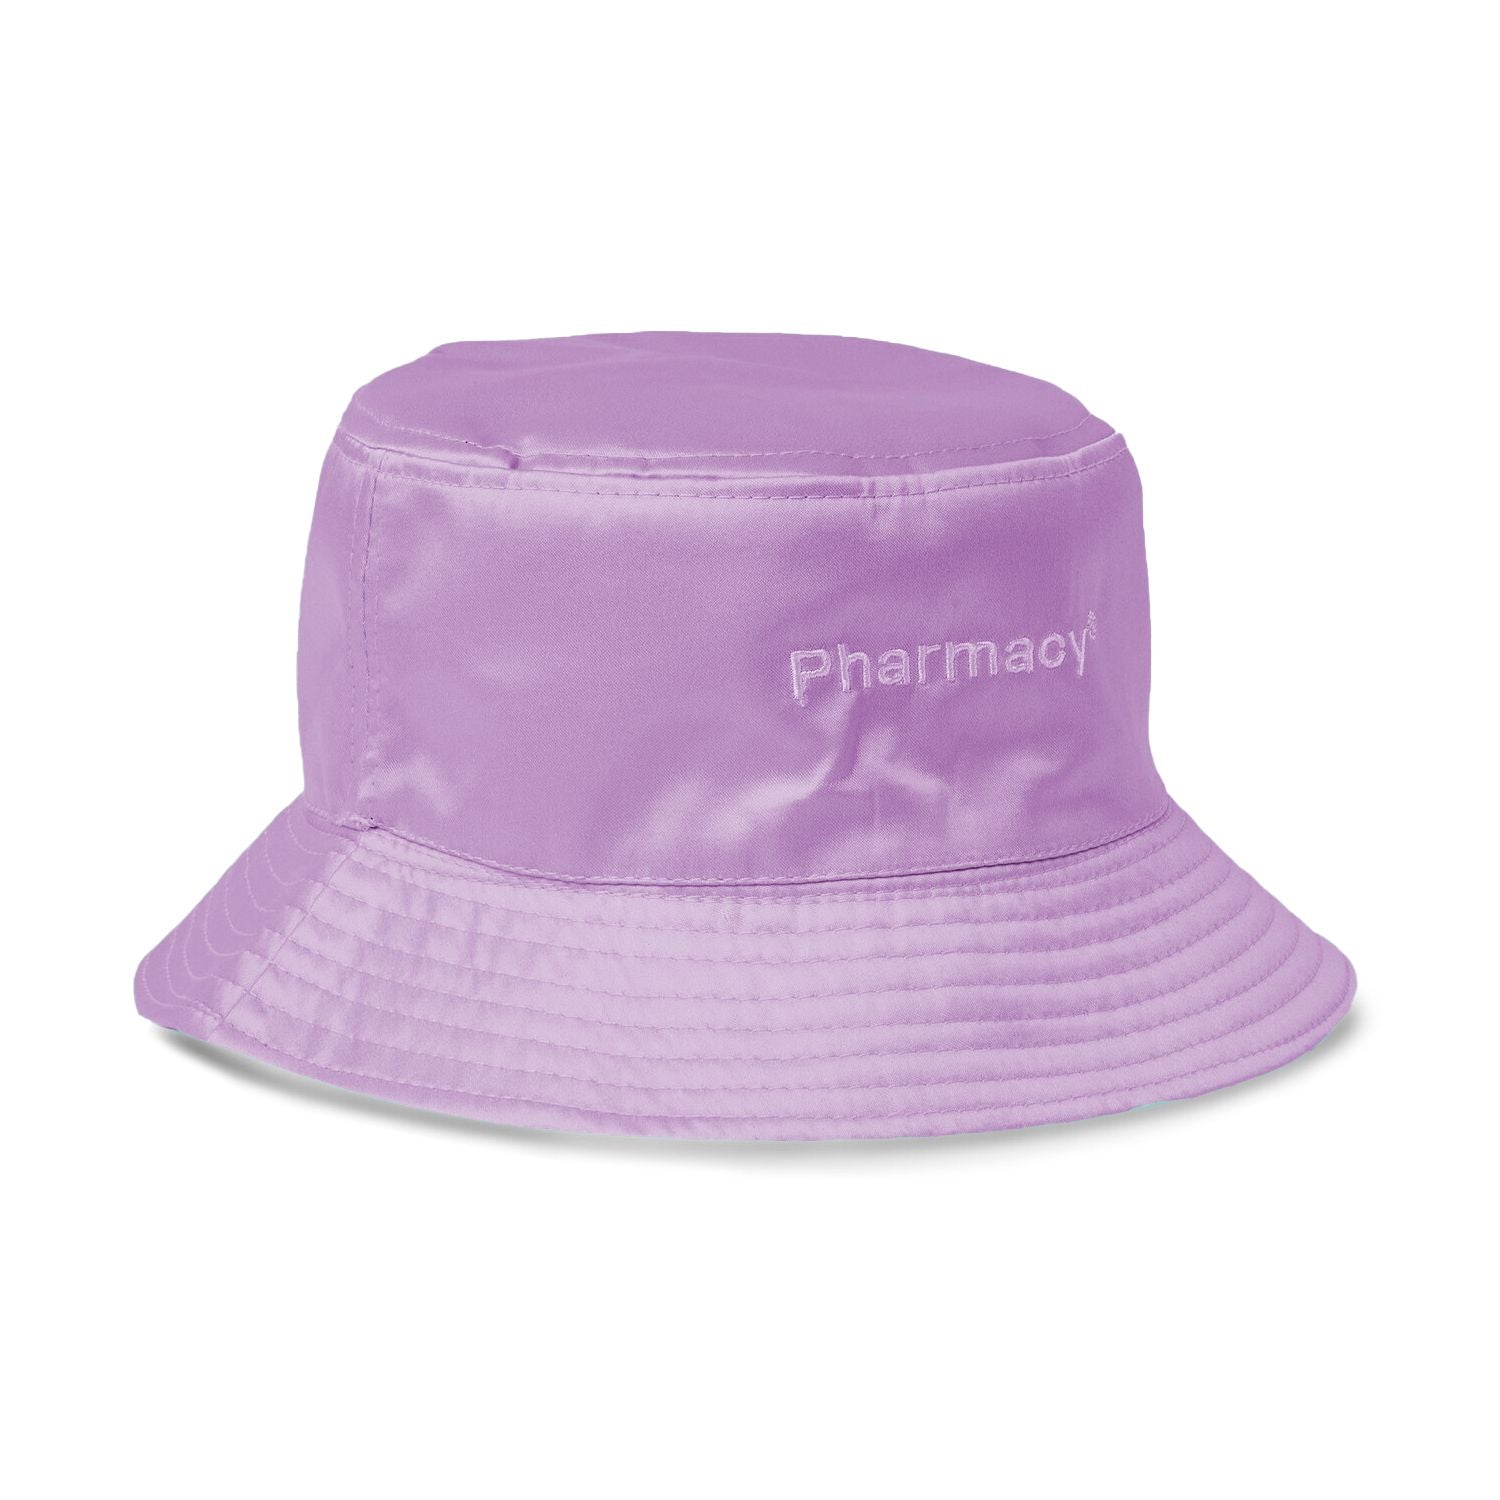 Pharmacy Industry Purple Cotton Hats & Cap